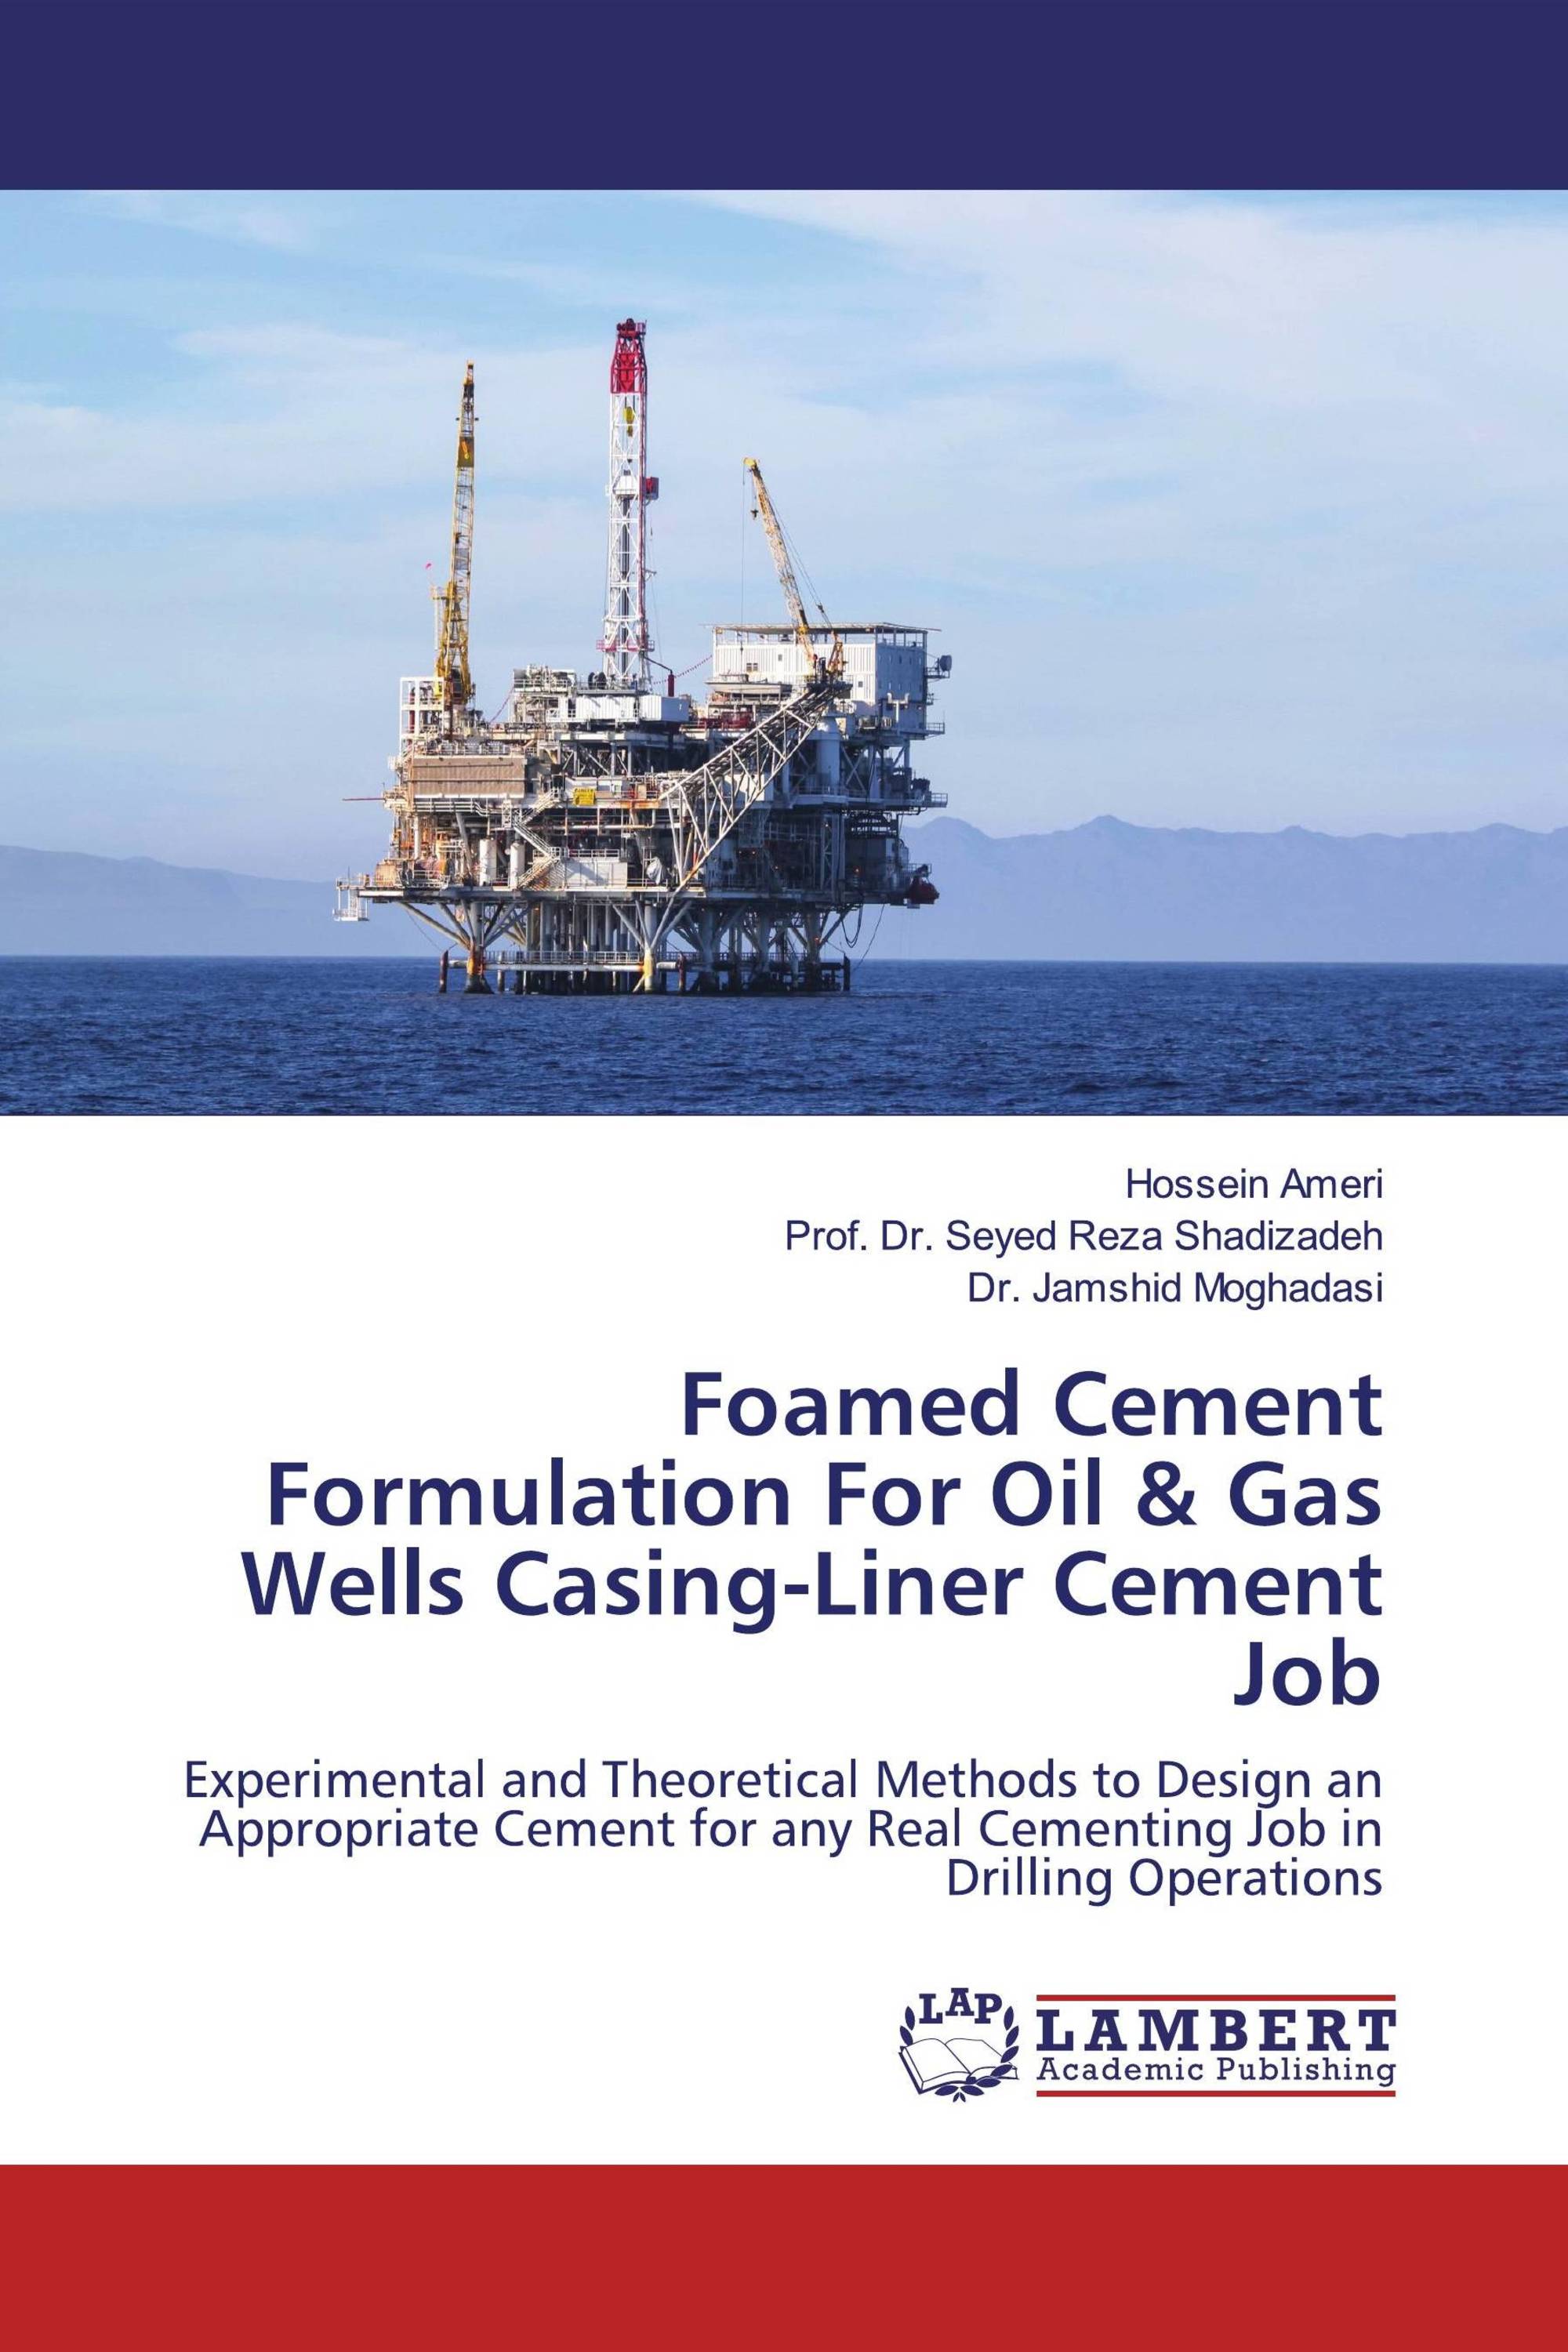 Foamed Cement Formulation For Oil & Gas Wells Casing-Liner Cement Job